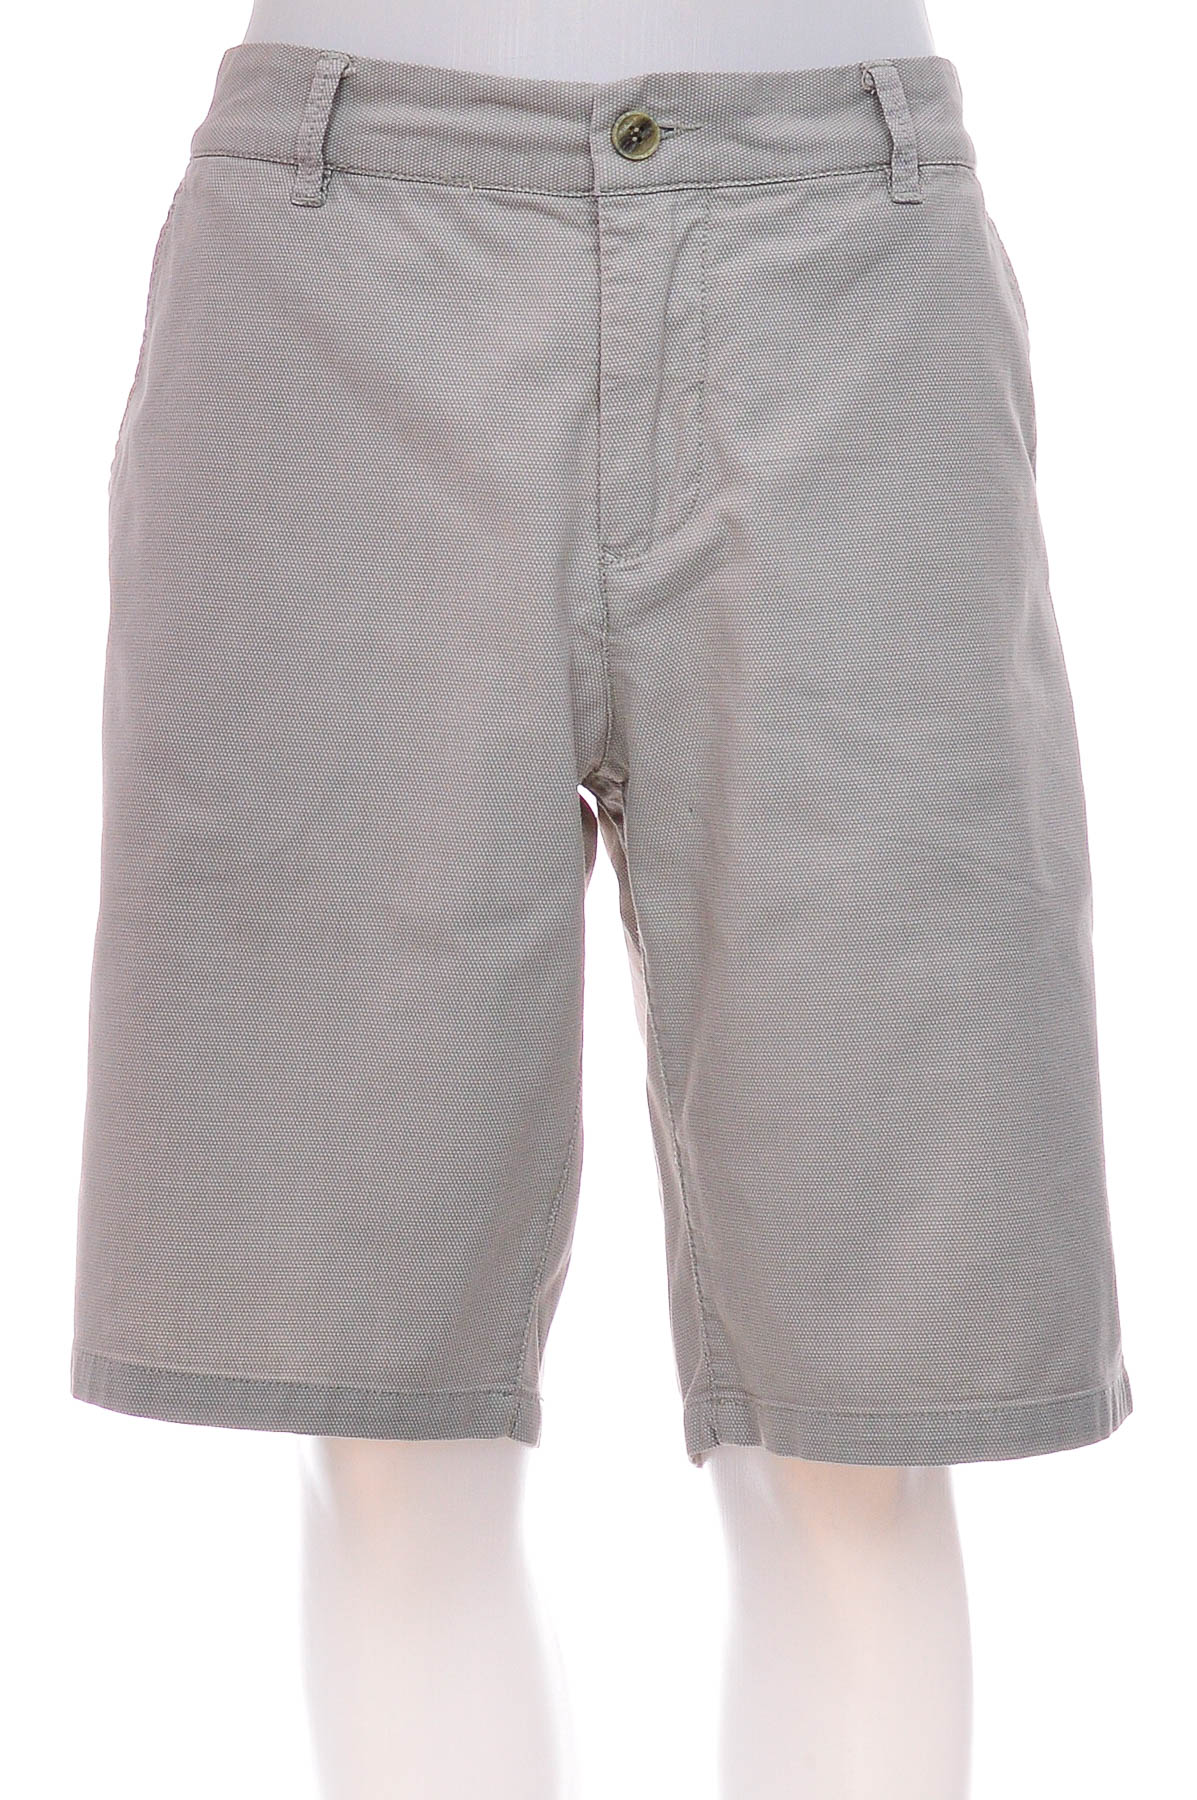 Men's shorts - HAMPTON BAYS MEN for jbc - 0